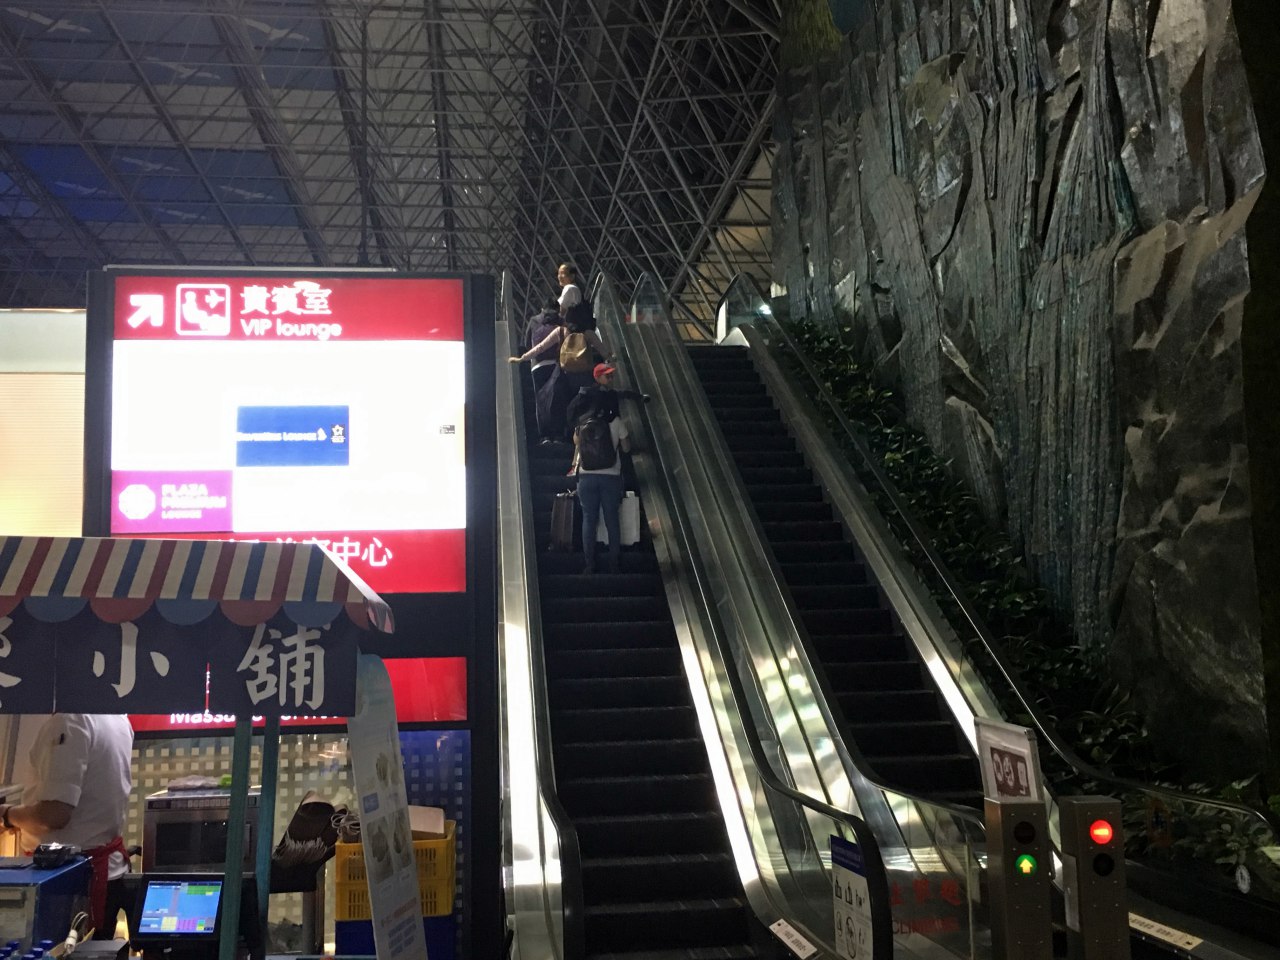 Escalator to Lounges-Taipei Airport